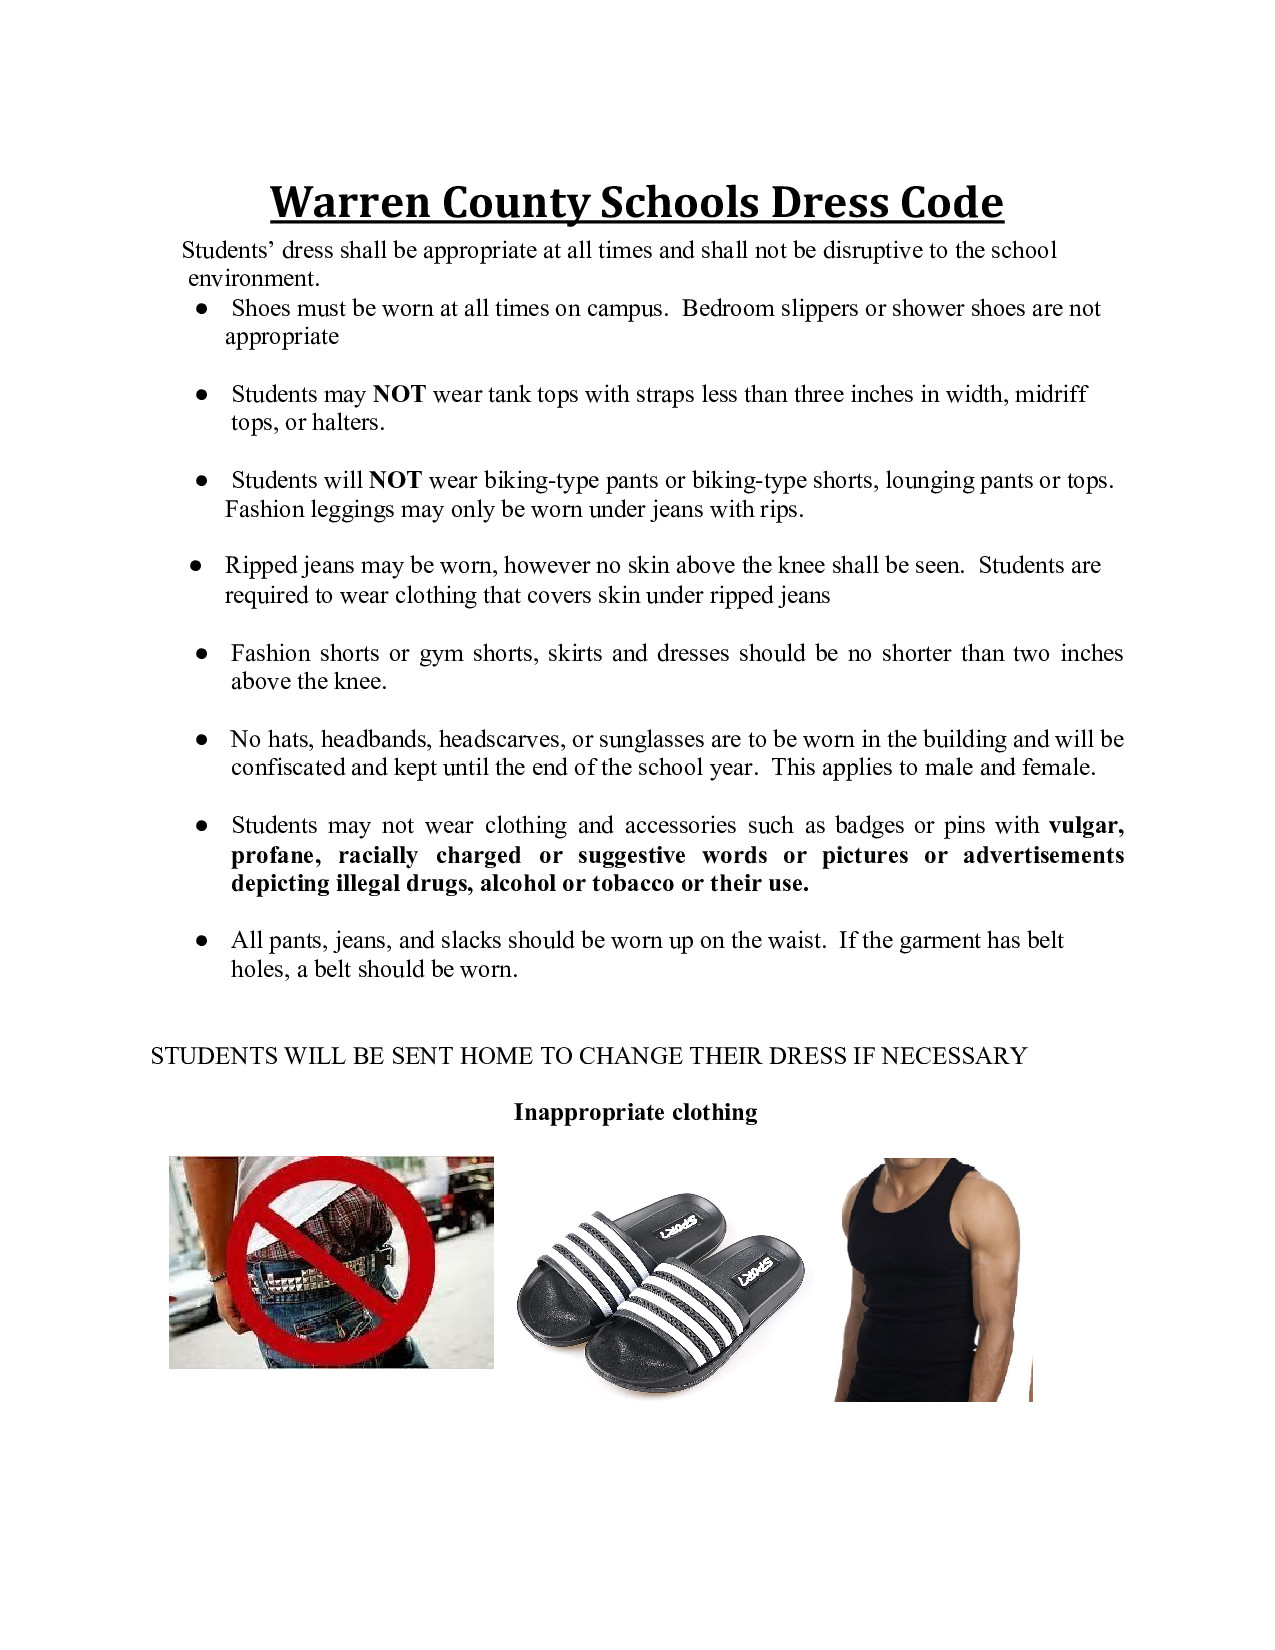 Warren County Dress Code